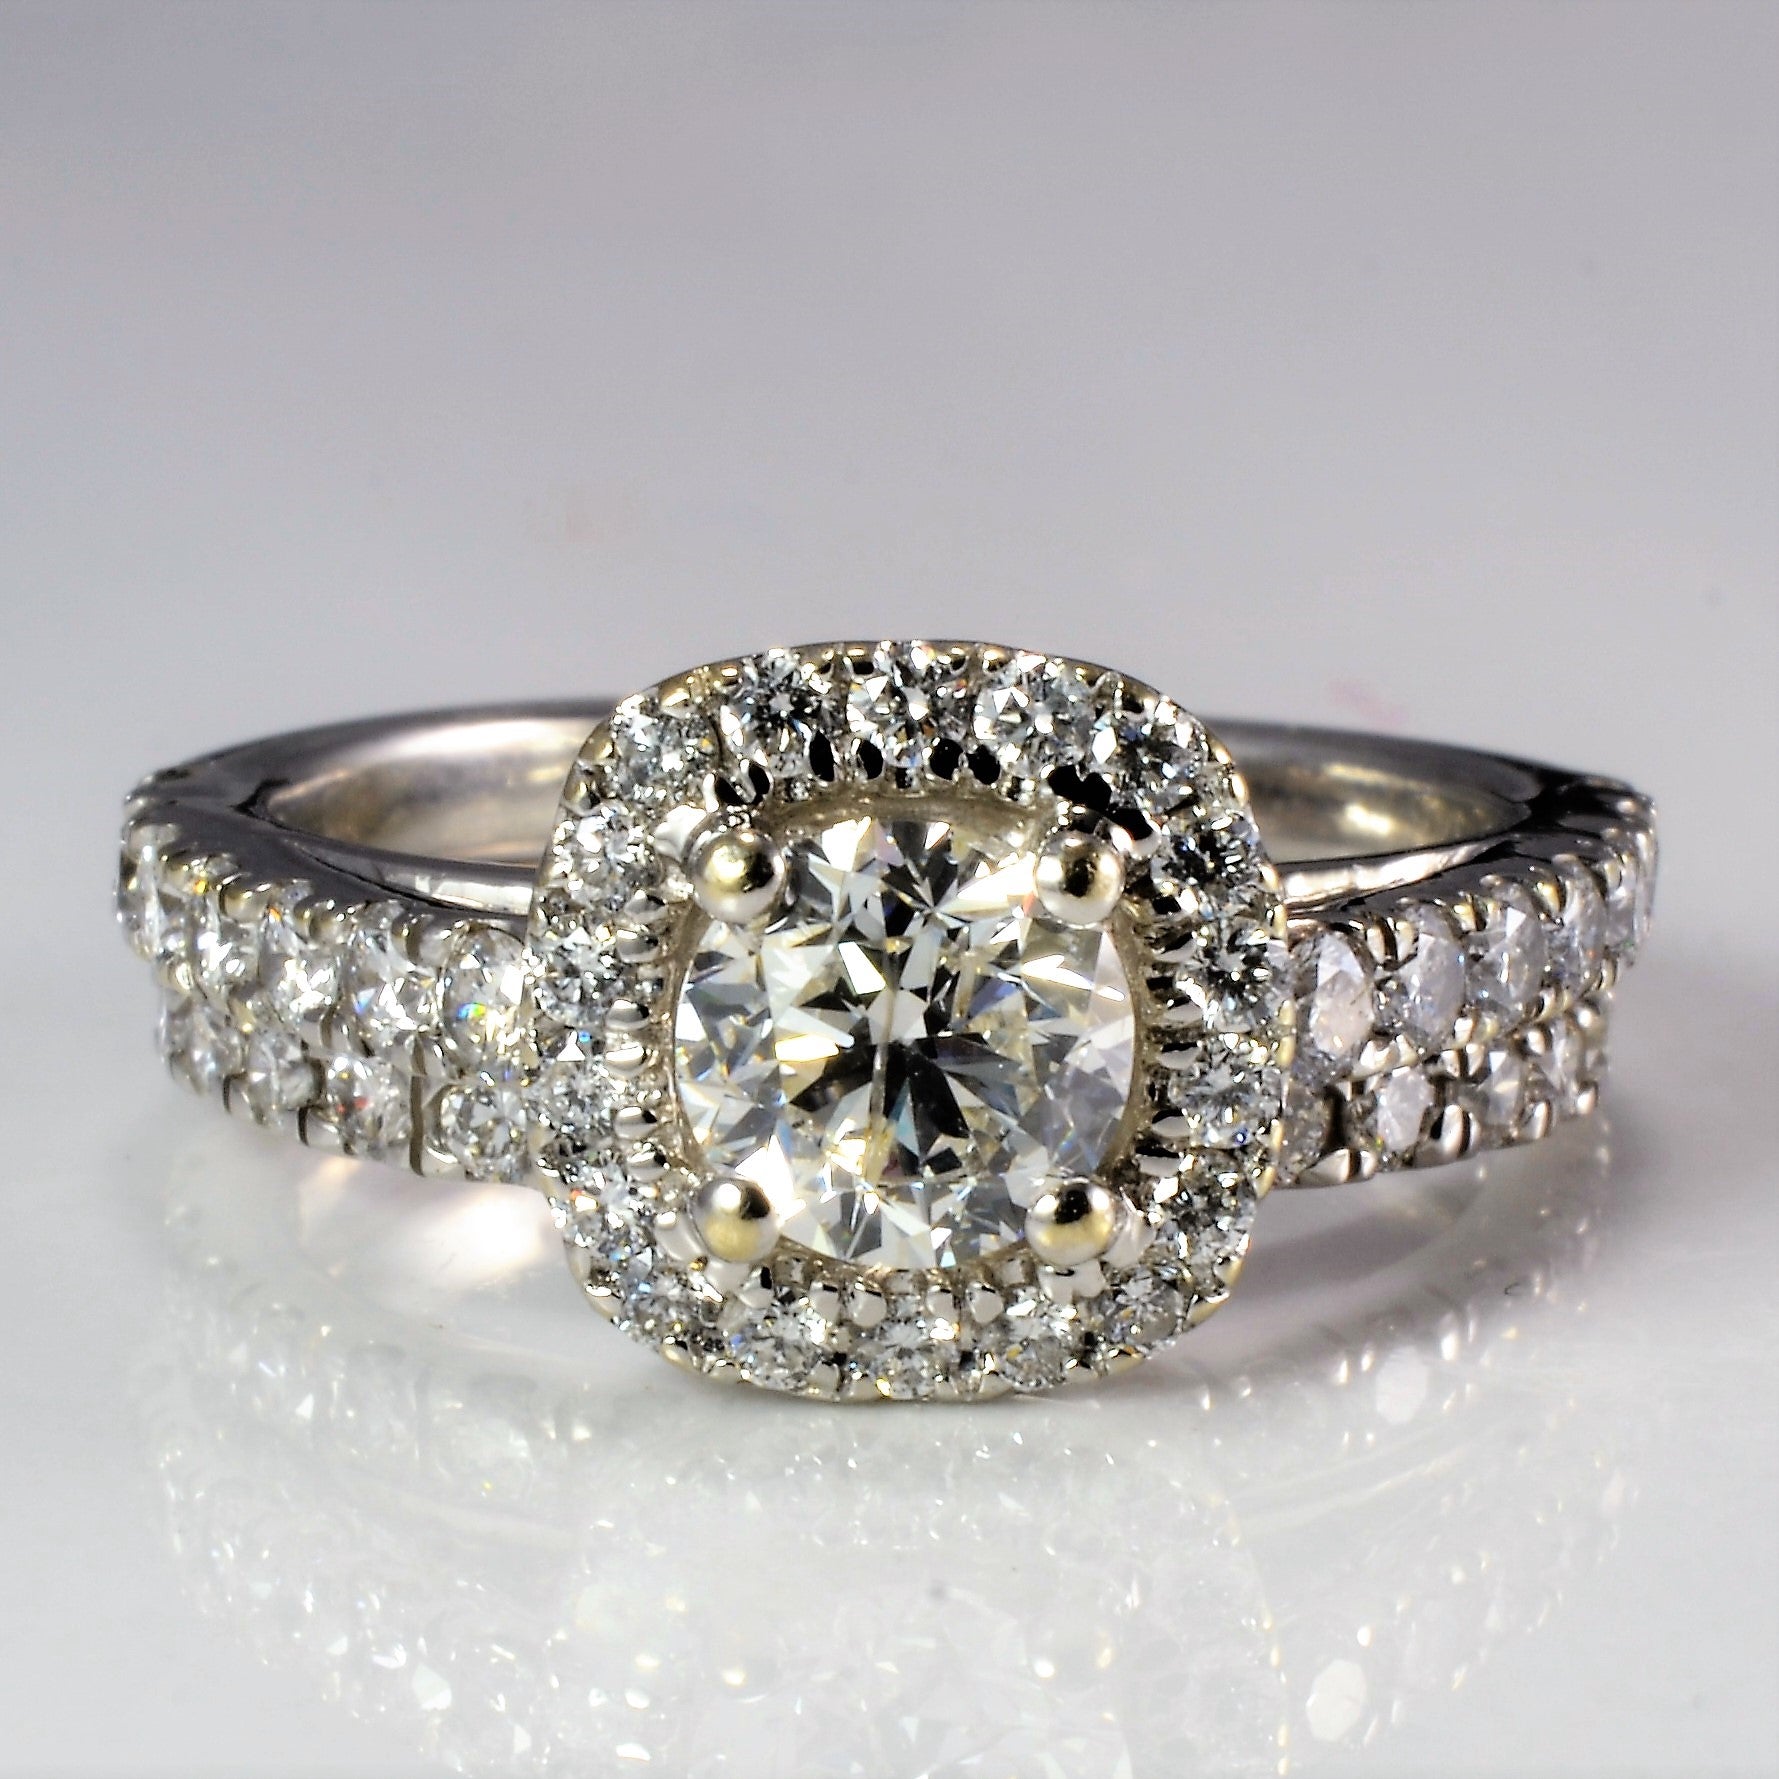 Soldered Halo Diamond Engagement Ring Set | 1.68 ctw, SZ 5 |